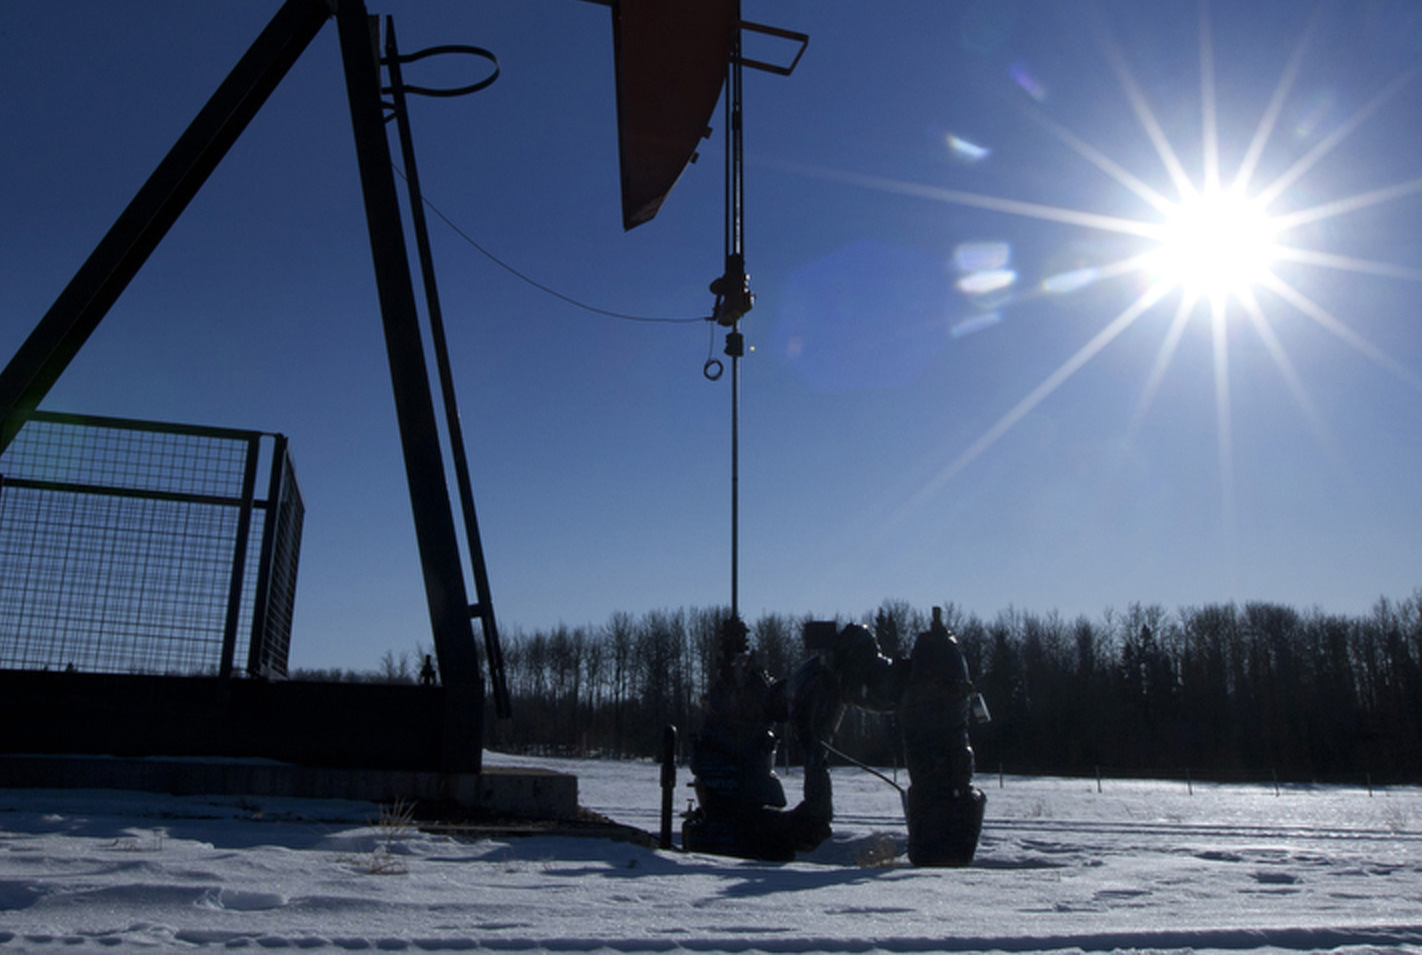 A pumpjack pumps oil from a well on a farmer's frozen field in a Pembina oil field near Pigeon Lake, Alberta, Canada on Friday, Feb. 17, 2012. The Pembina oil field is one of the largest oil fields in the province of Alberta.
